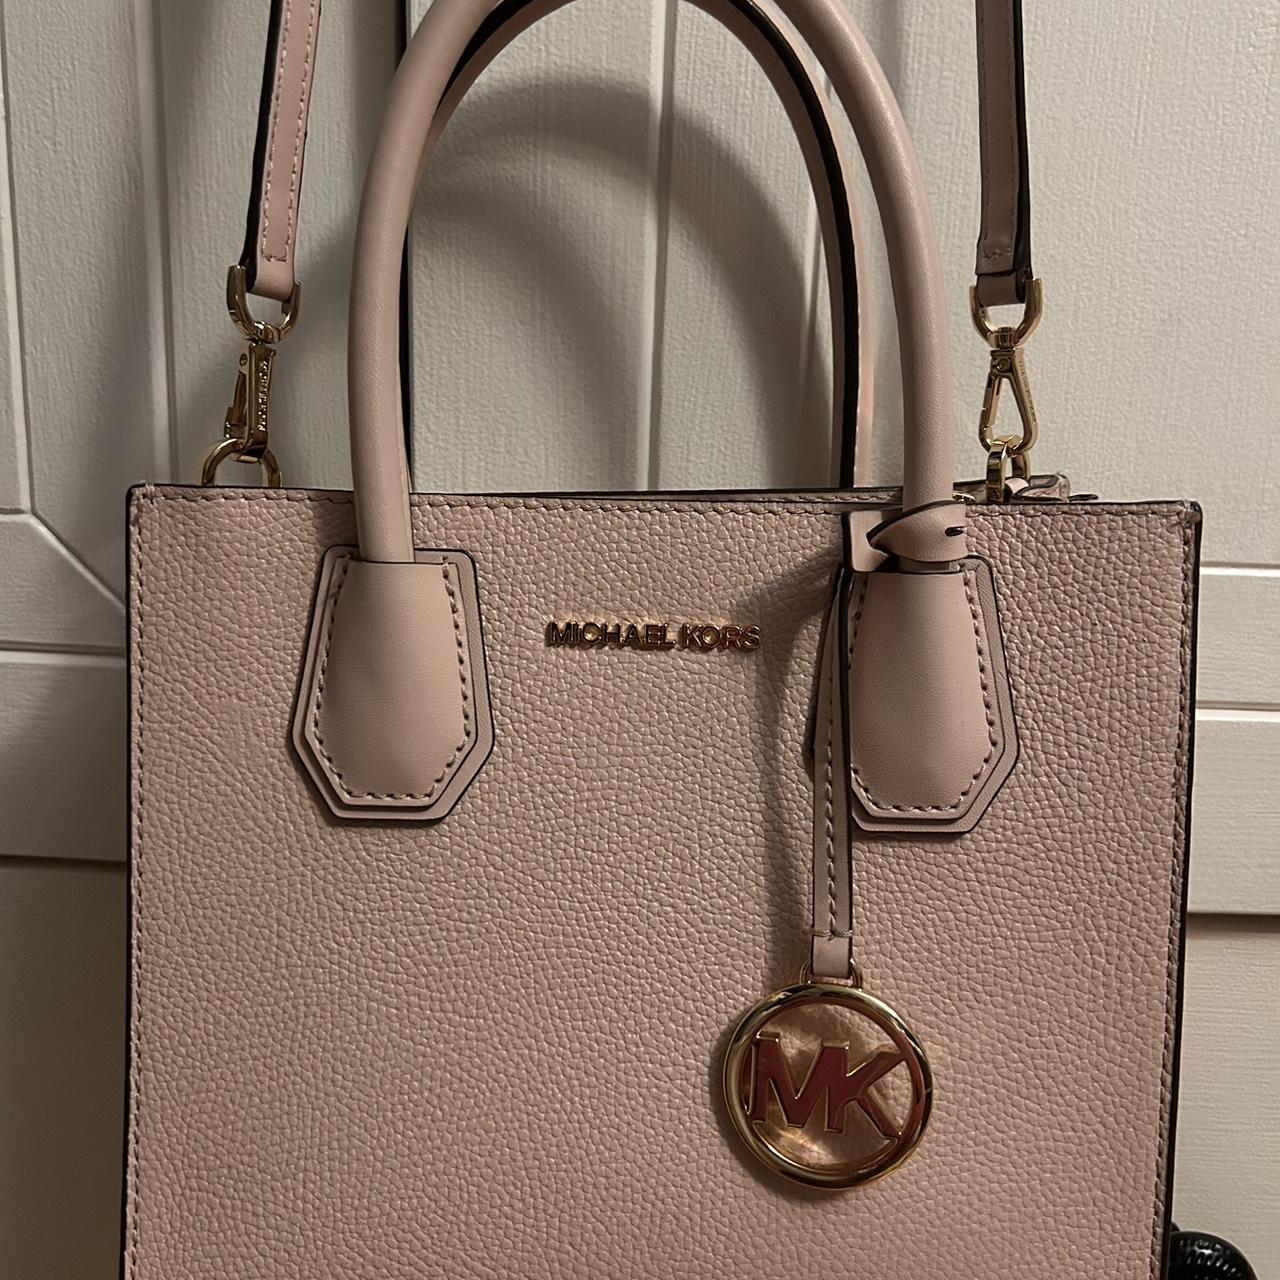 Michael Kors light pink purse | Light pink purse, Pink purse, Purses